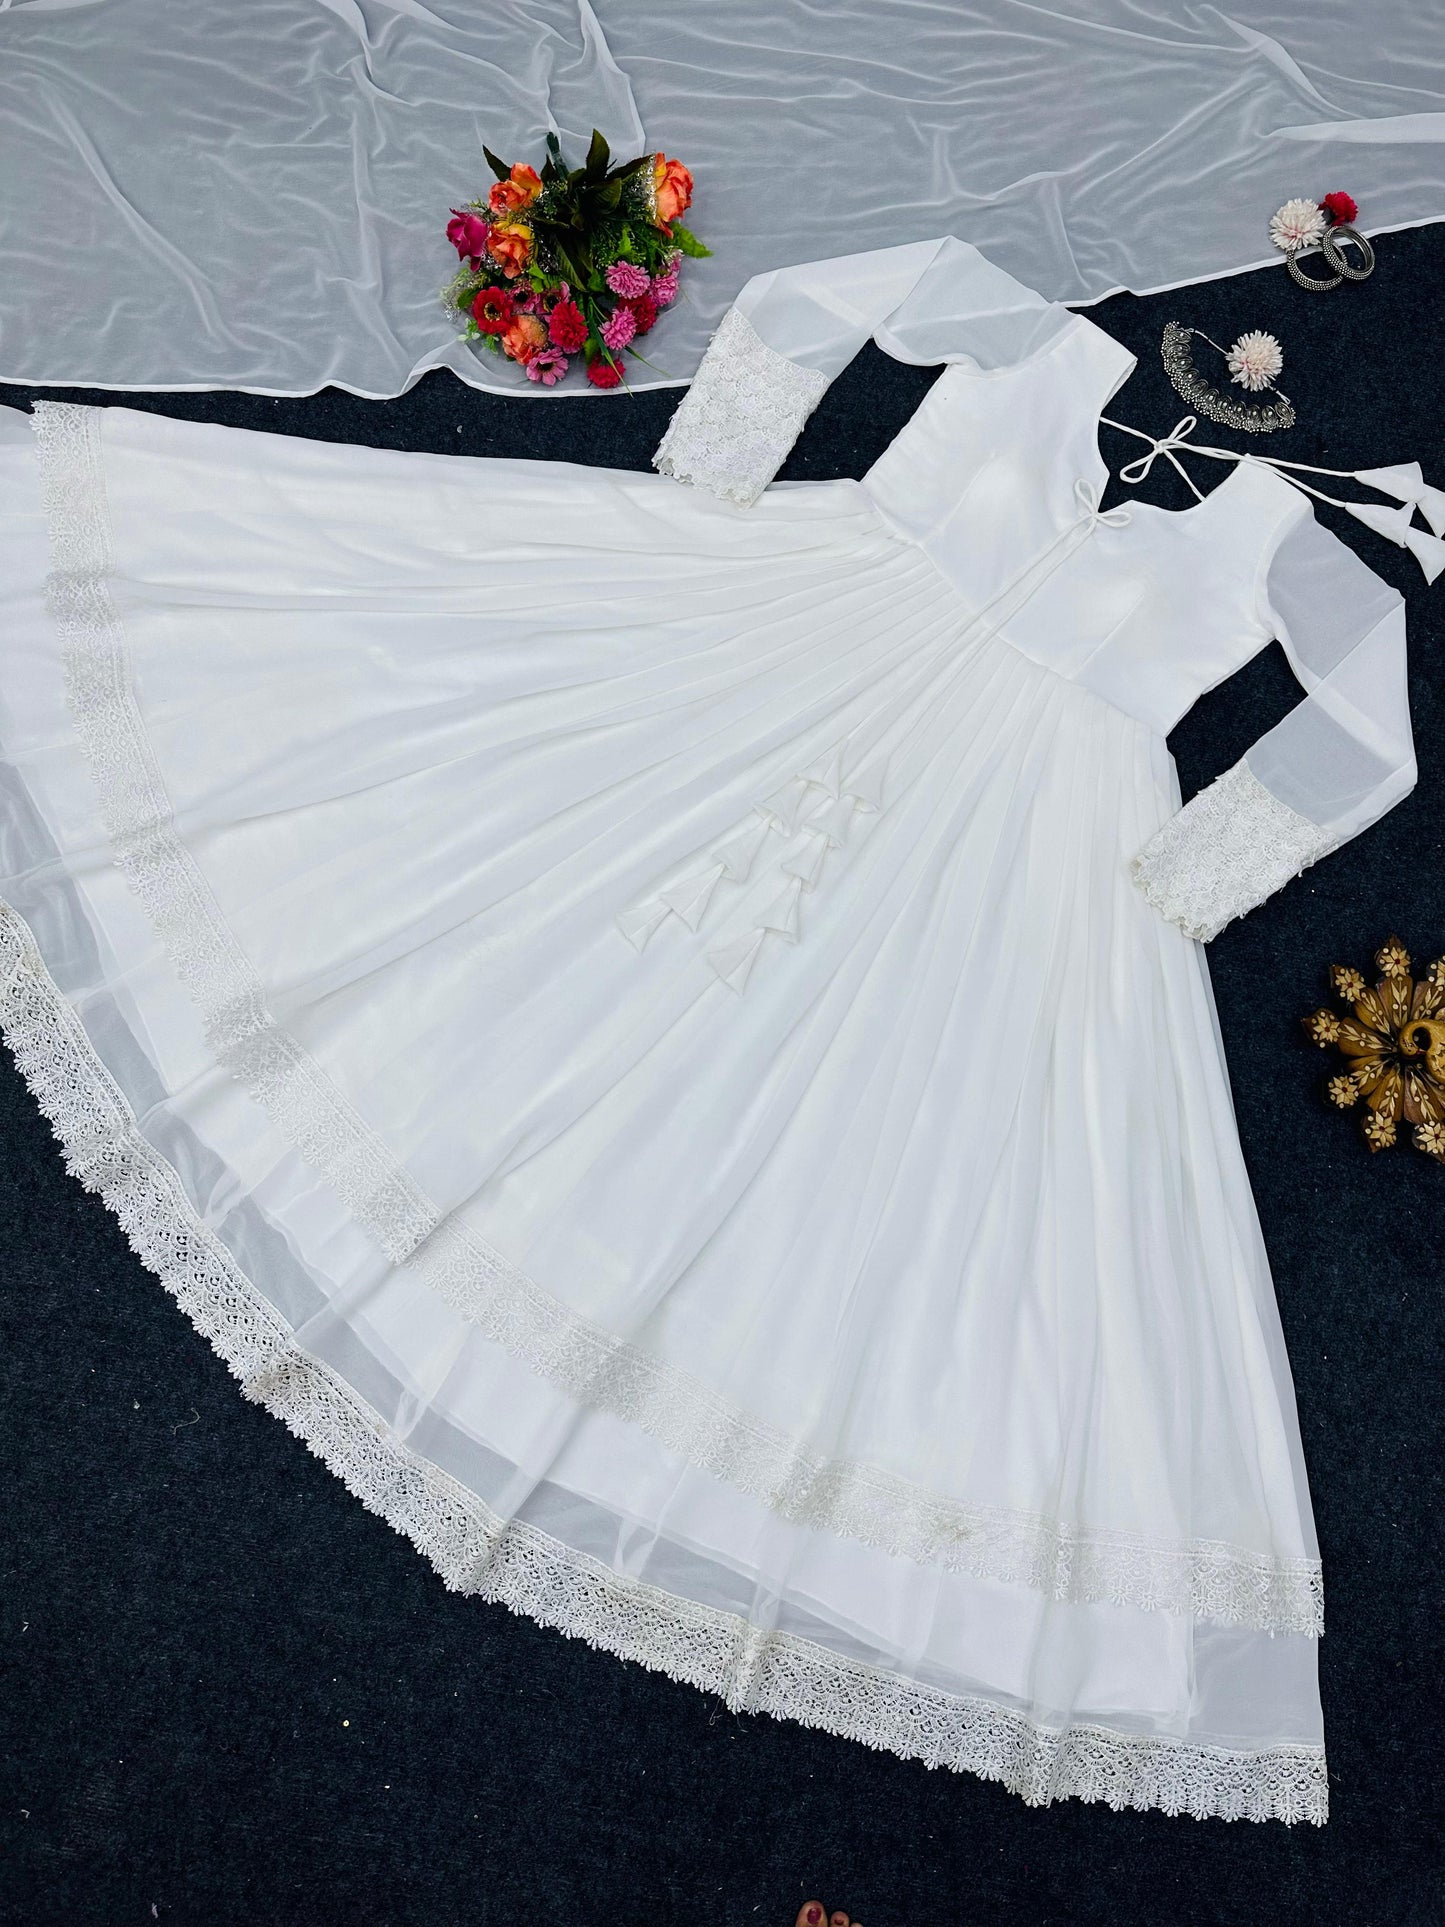 Indian Premium Ethnic White Anarkali Suit with Tassel & Dupatta, White Salwar Kameez Partywear Anarkali, 2 pc Set Readymade suit for woman